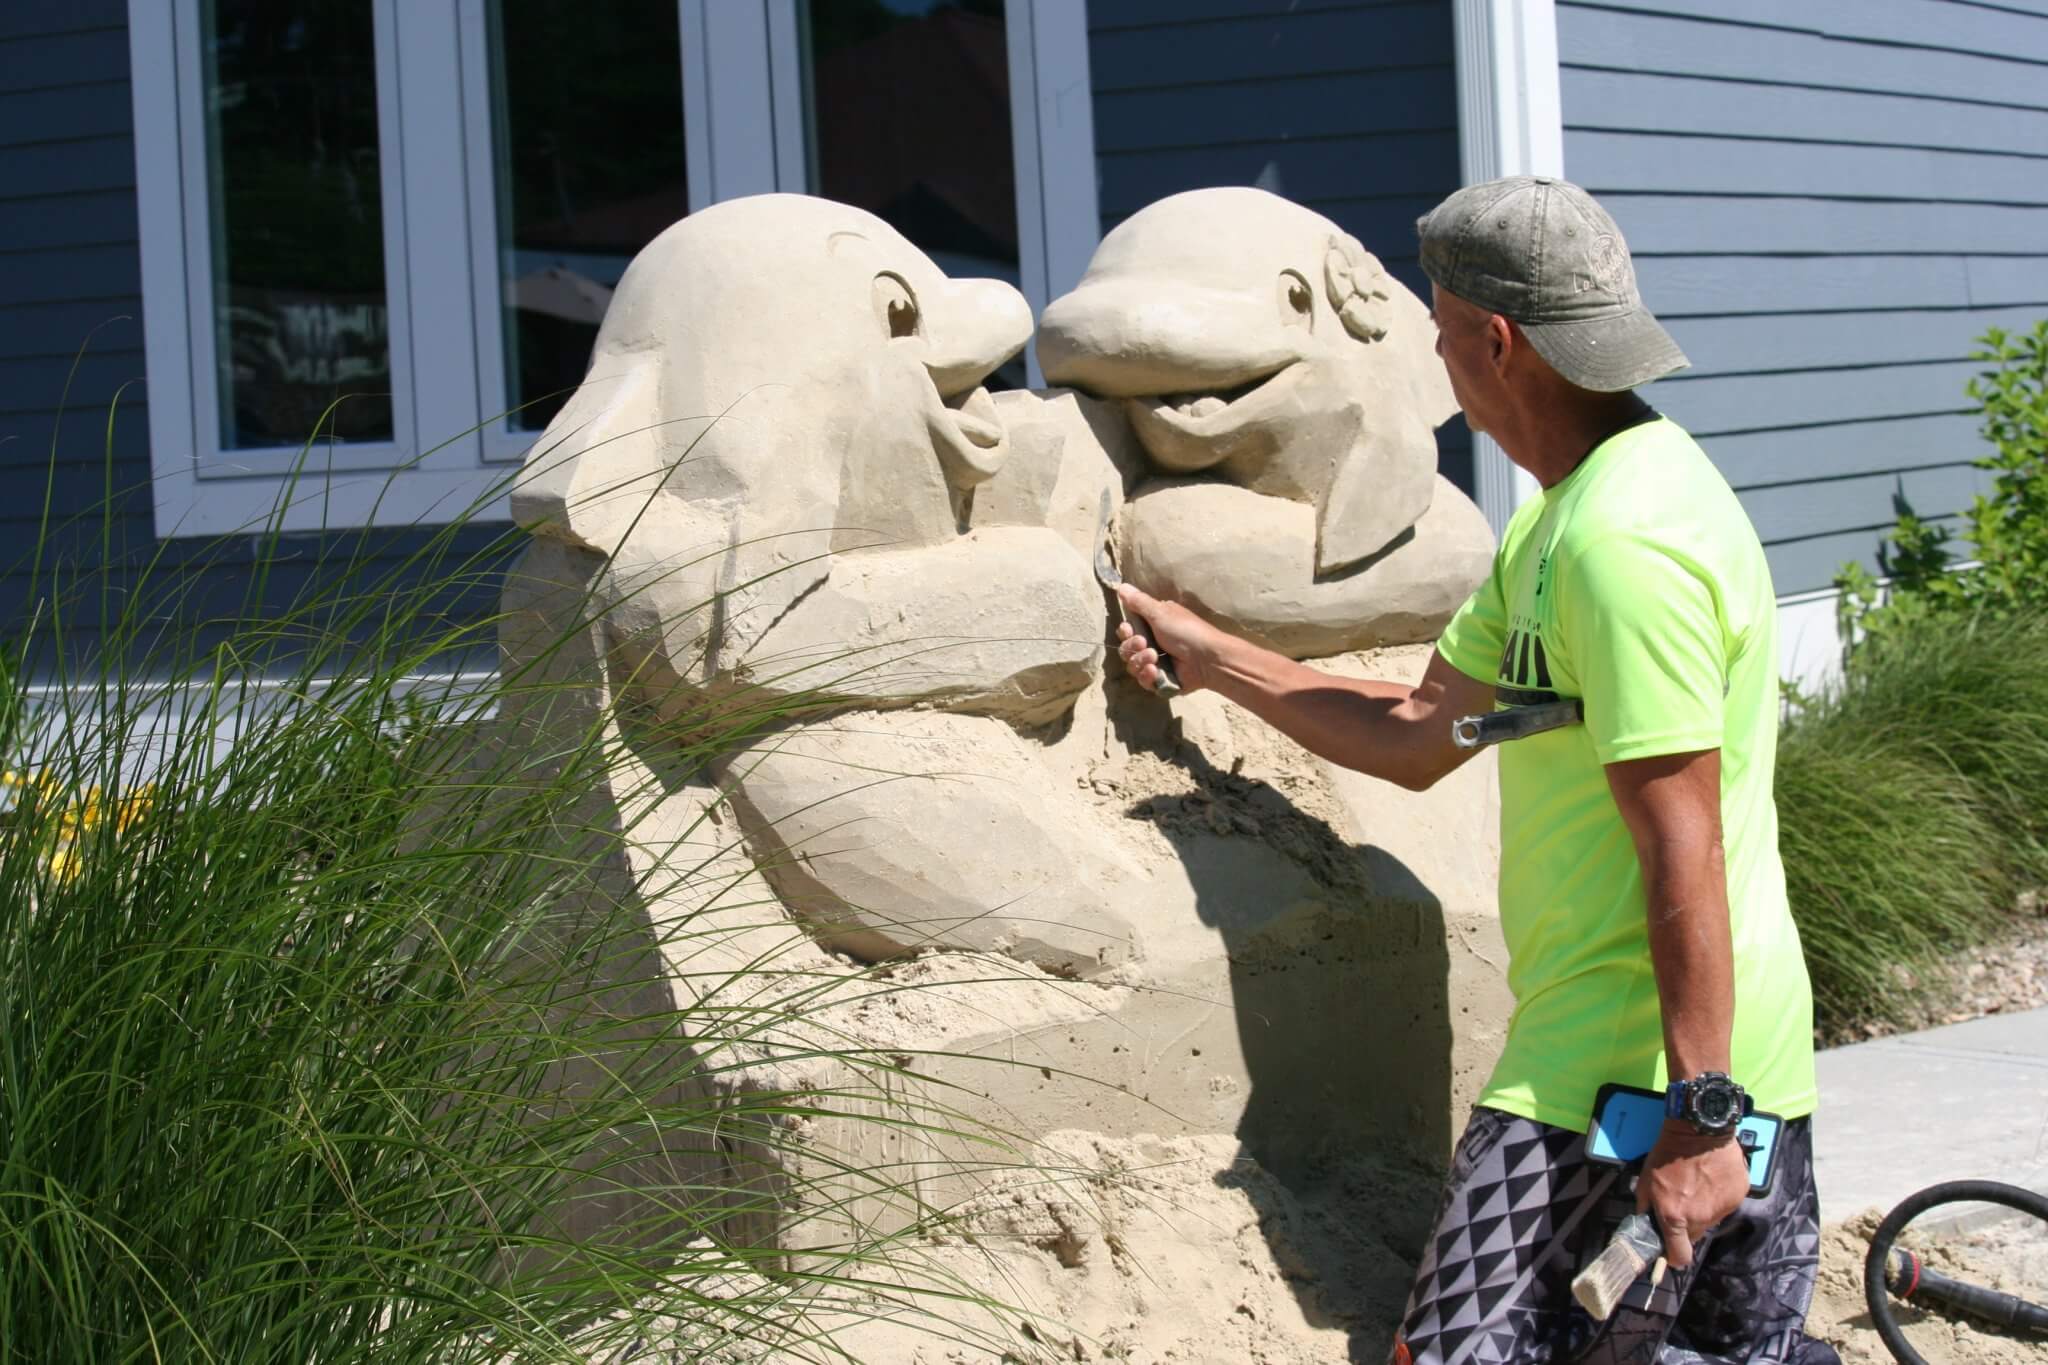 Explore The Yarmouth Sand Sculpture Trail In Cape Cod, MA